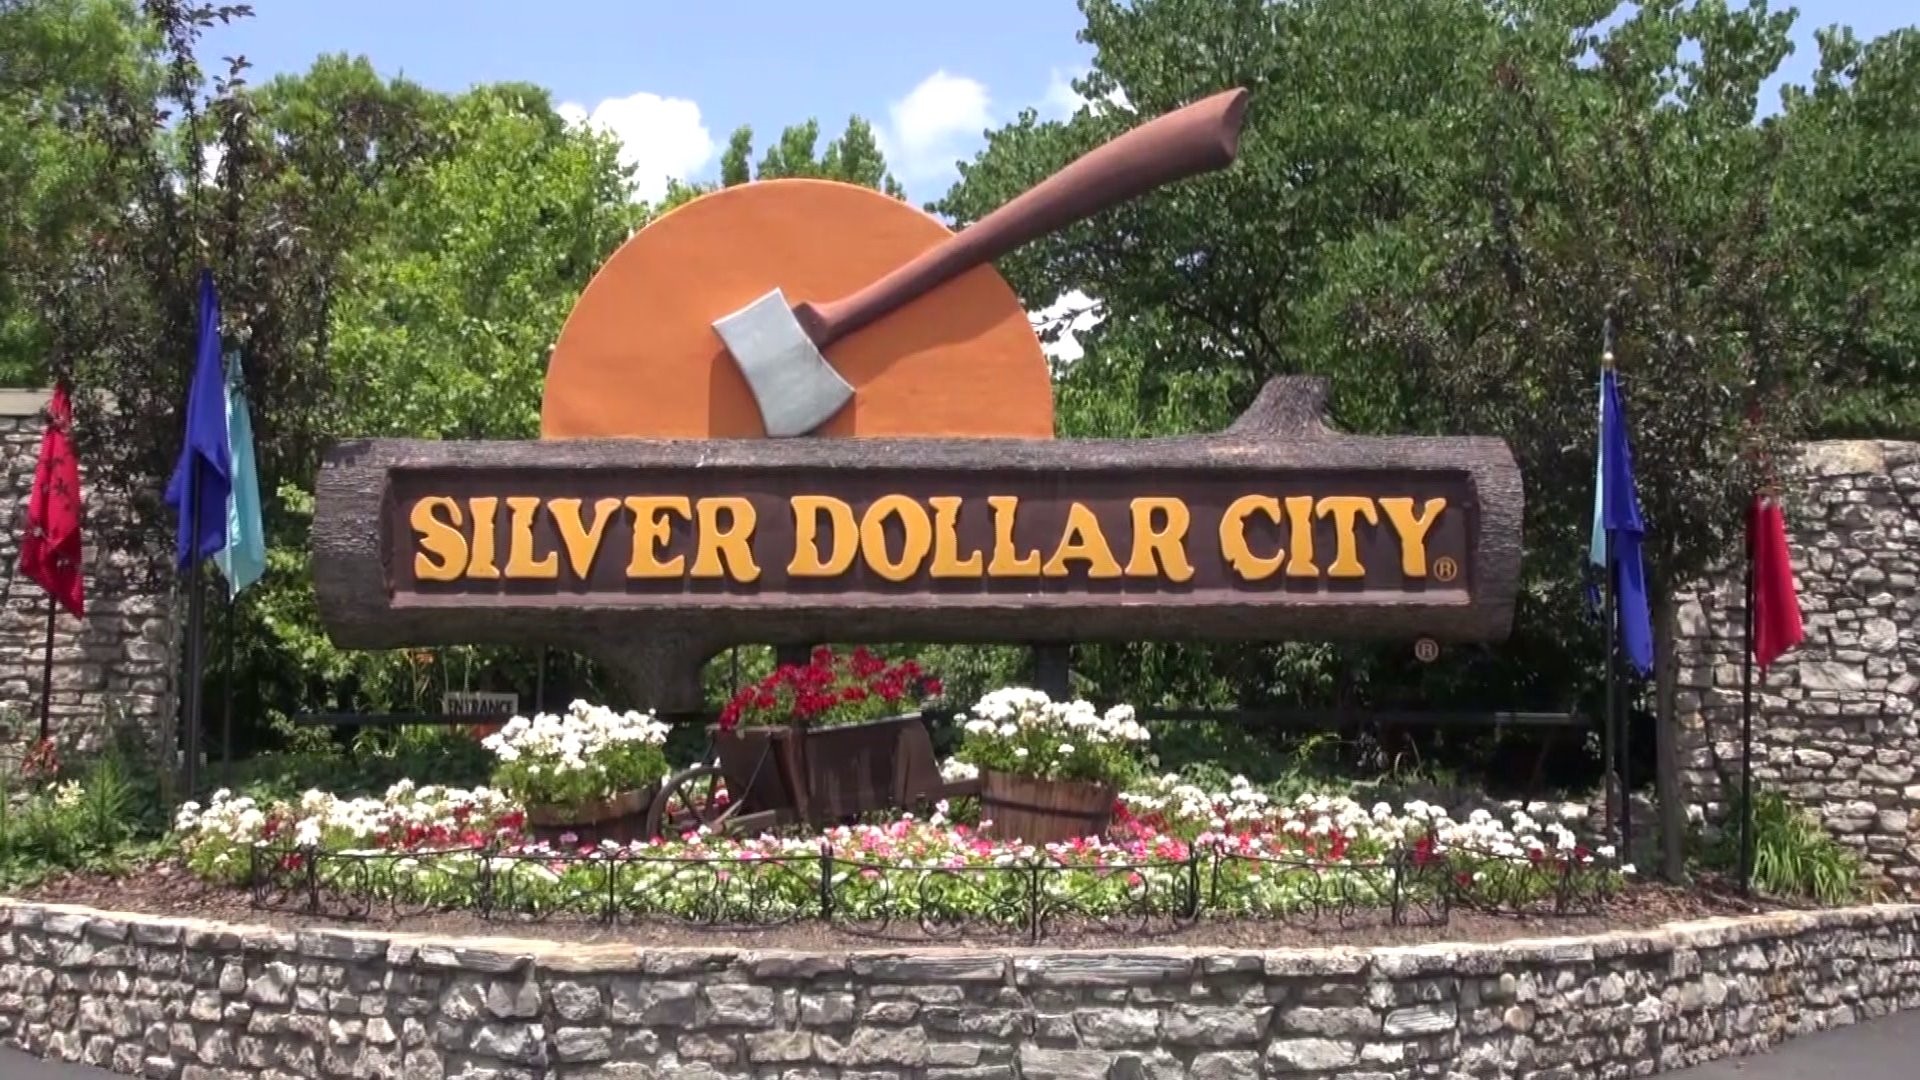 Silver Dollar City Discount Tickets?